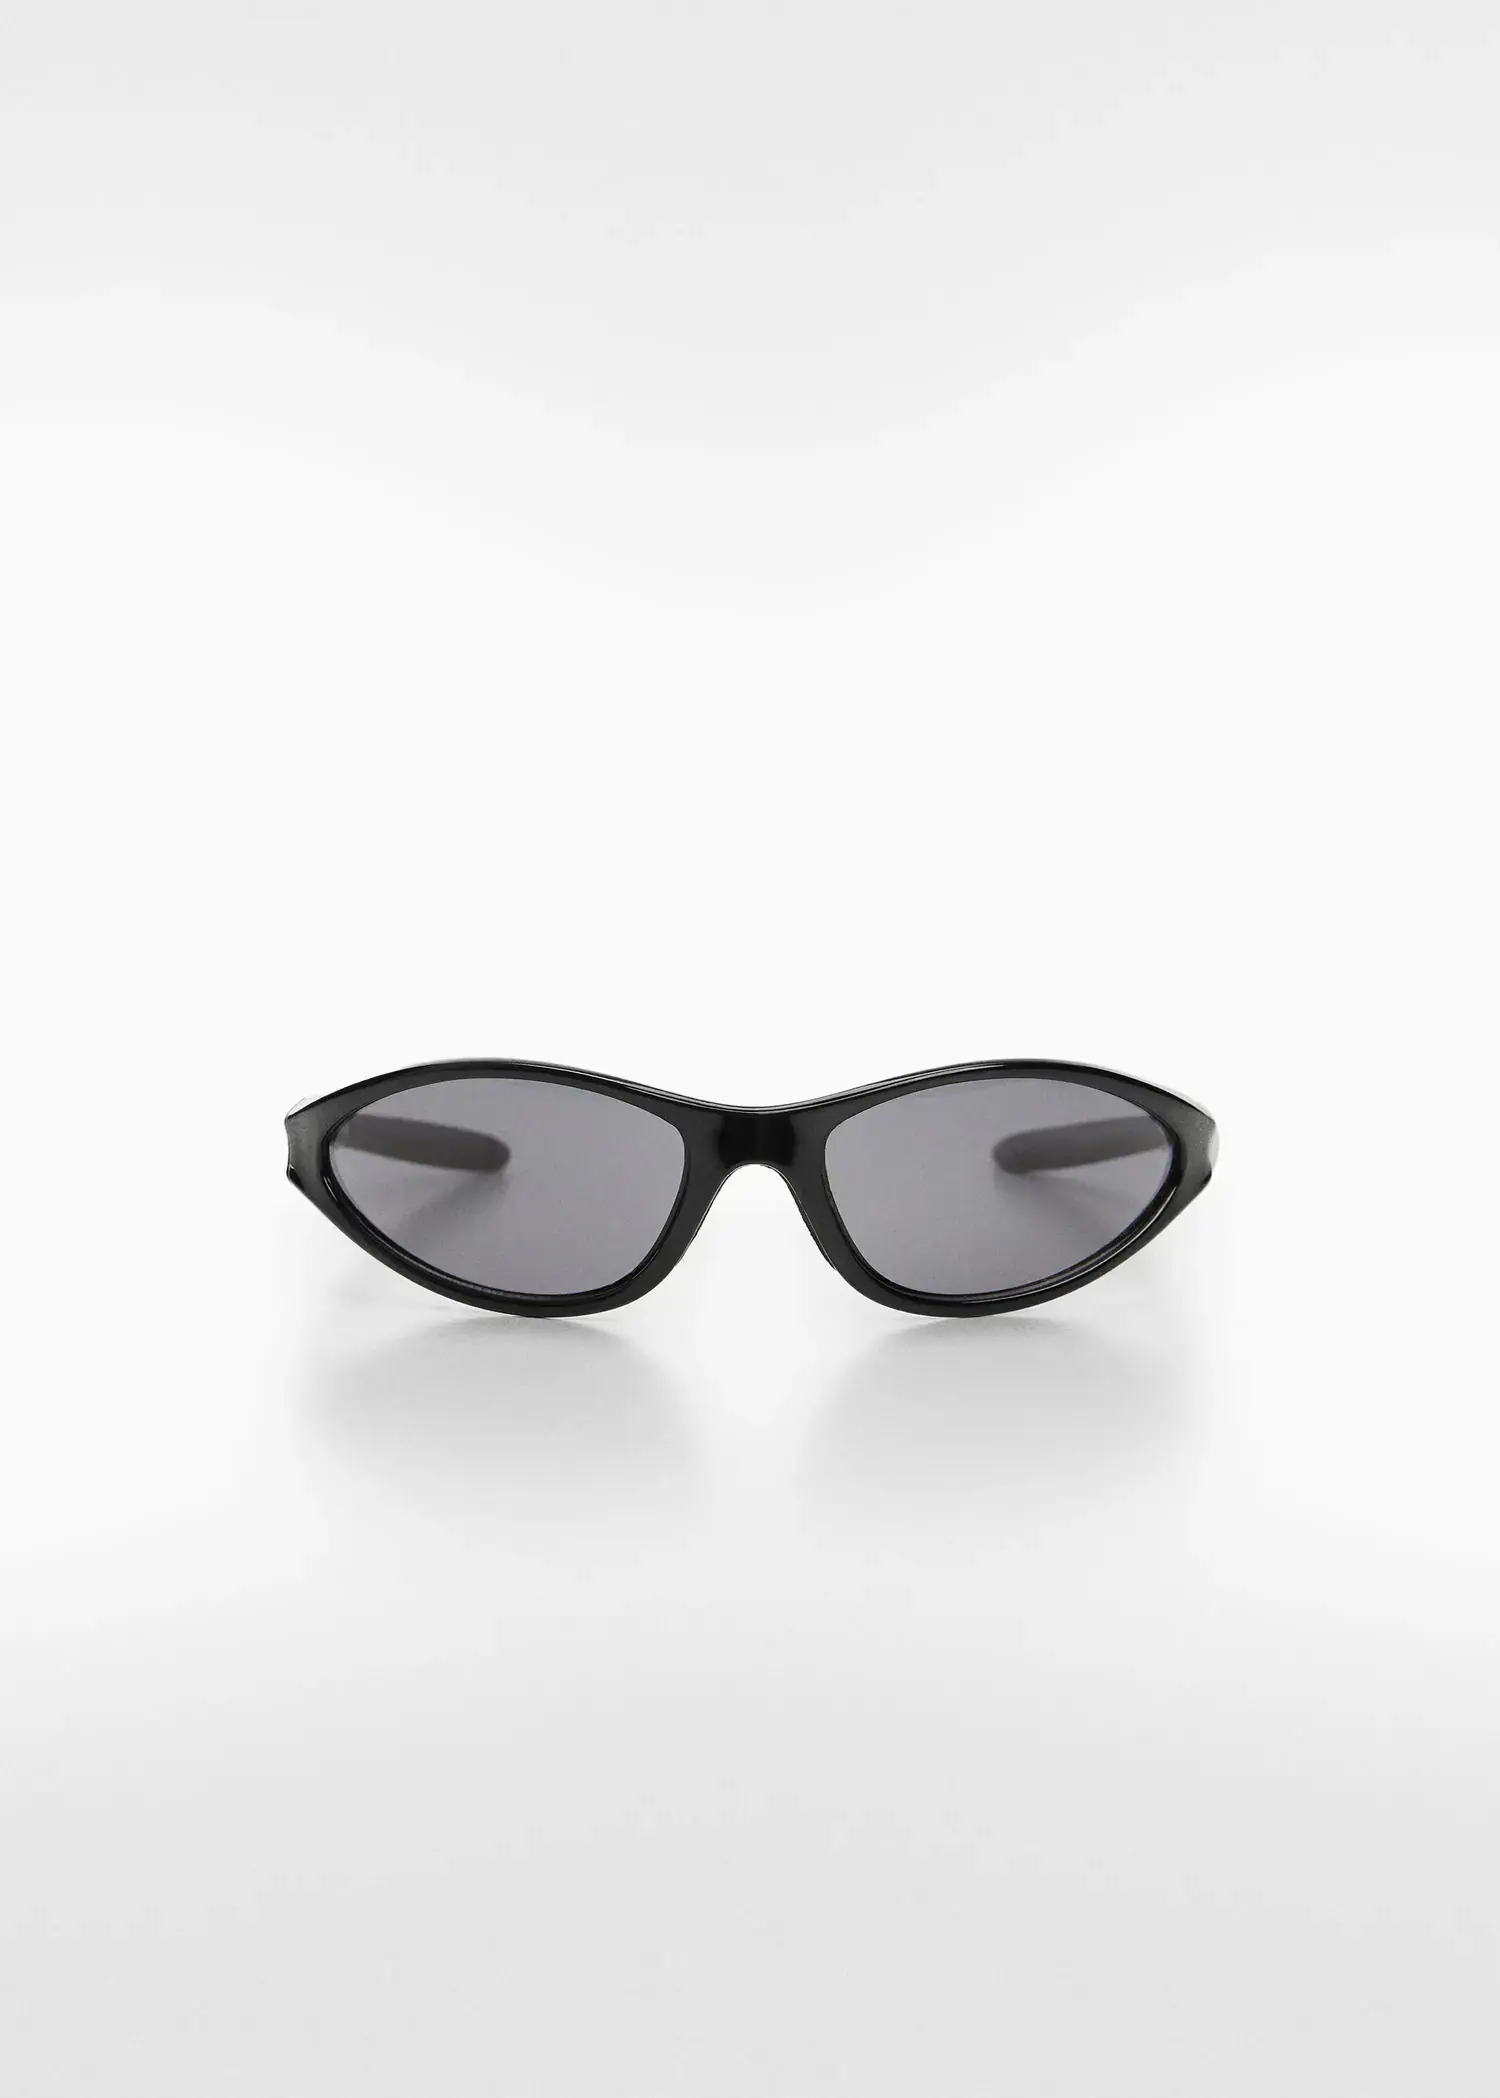 Mango Curved frame sunglasses. 2